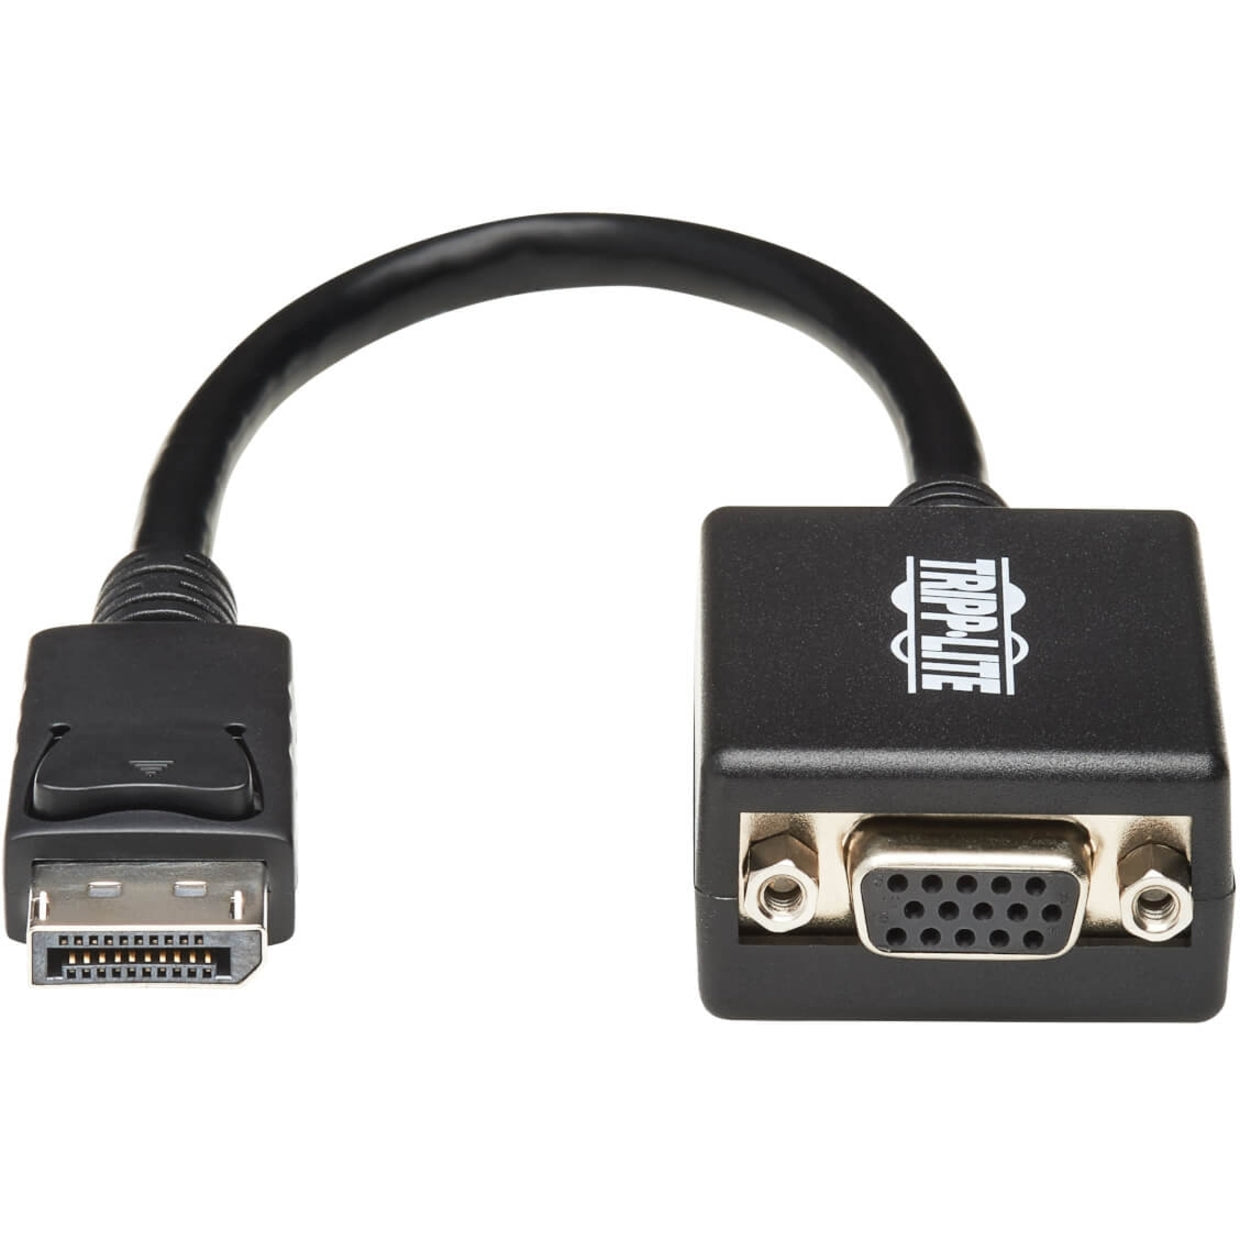 Tripp Lite P134-06N-VGA Adaptador de cable activo DisplayPort a VGA Plug & Play resolución admitida de 1920 x 1200. Marca: Tripp Lite. Traducción de la marca: Tripp Lite.